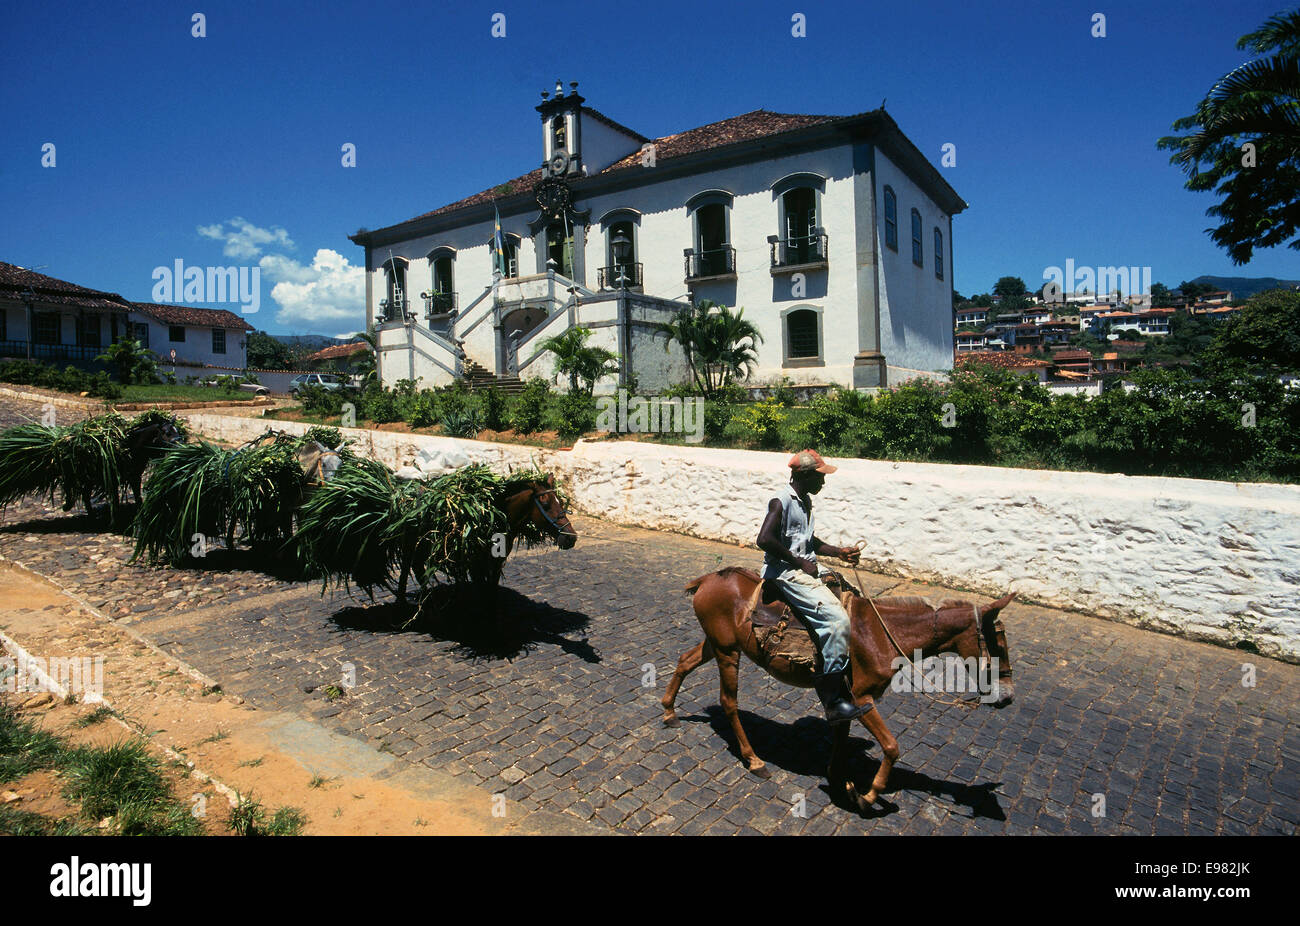 america, brazil, minas gerais, mariana, casa capitular and line of donkeys Stock Photo